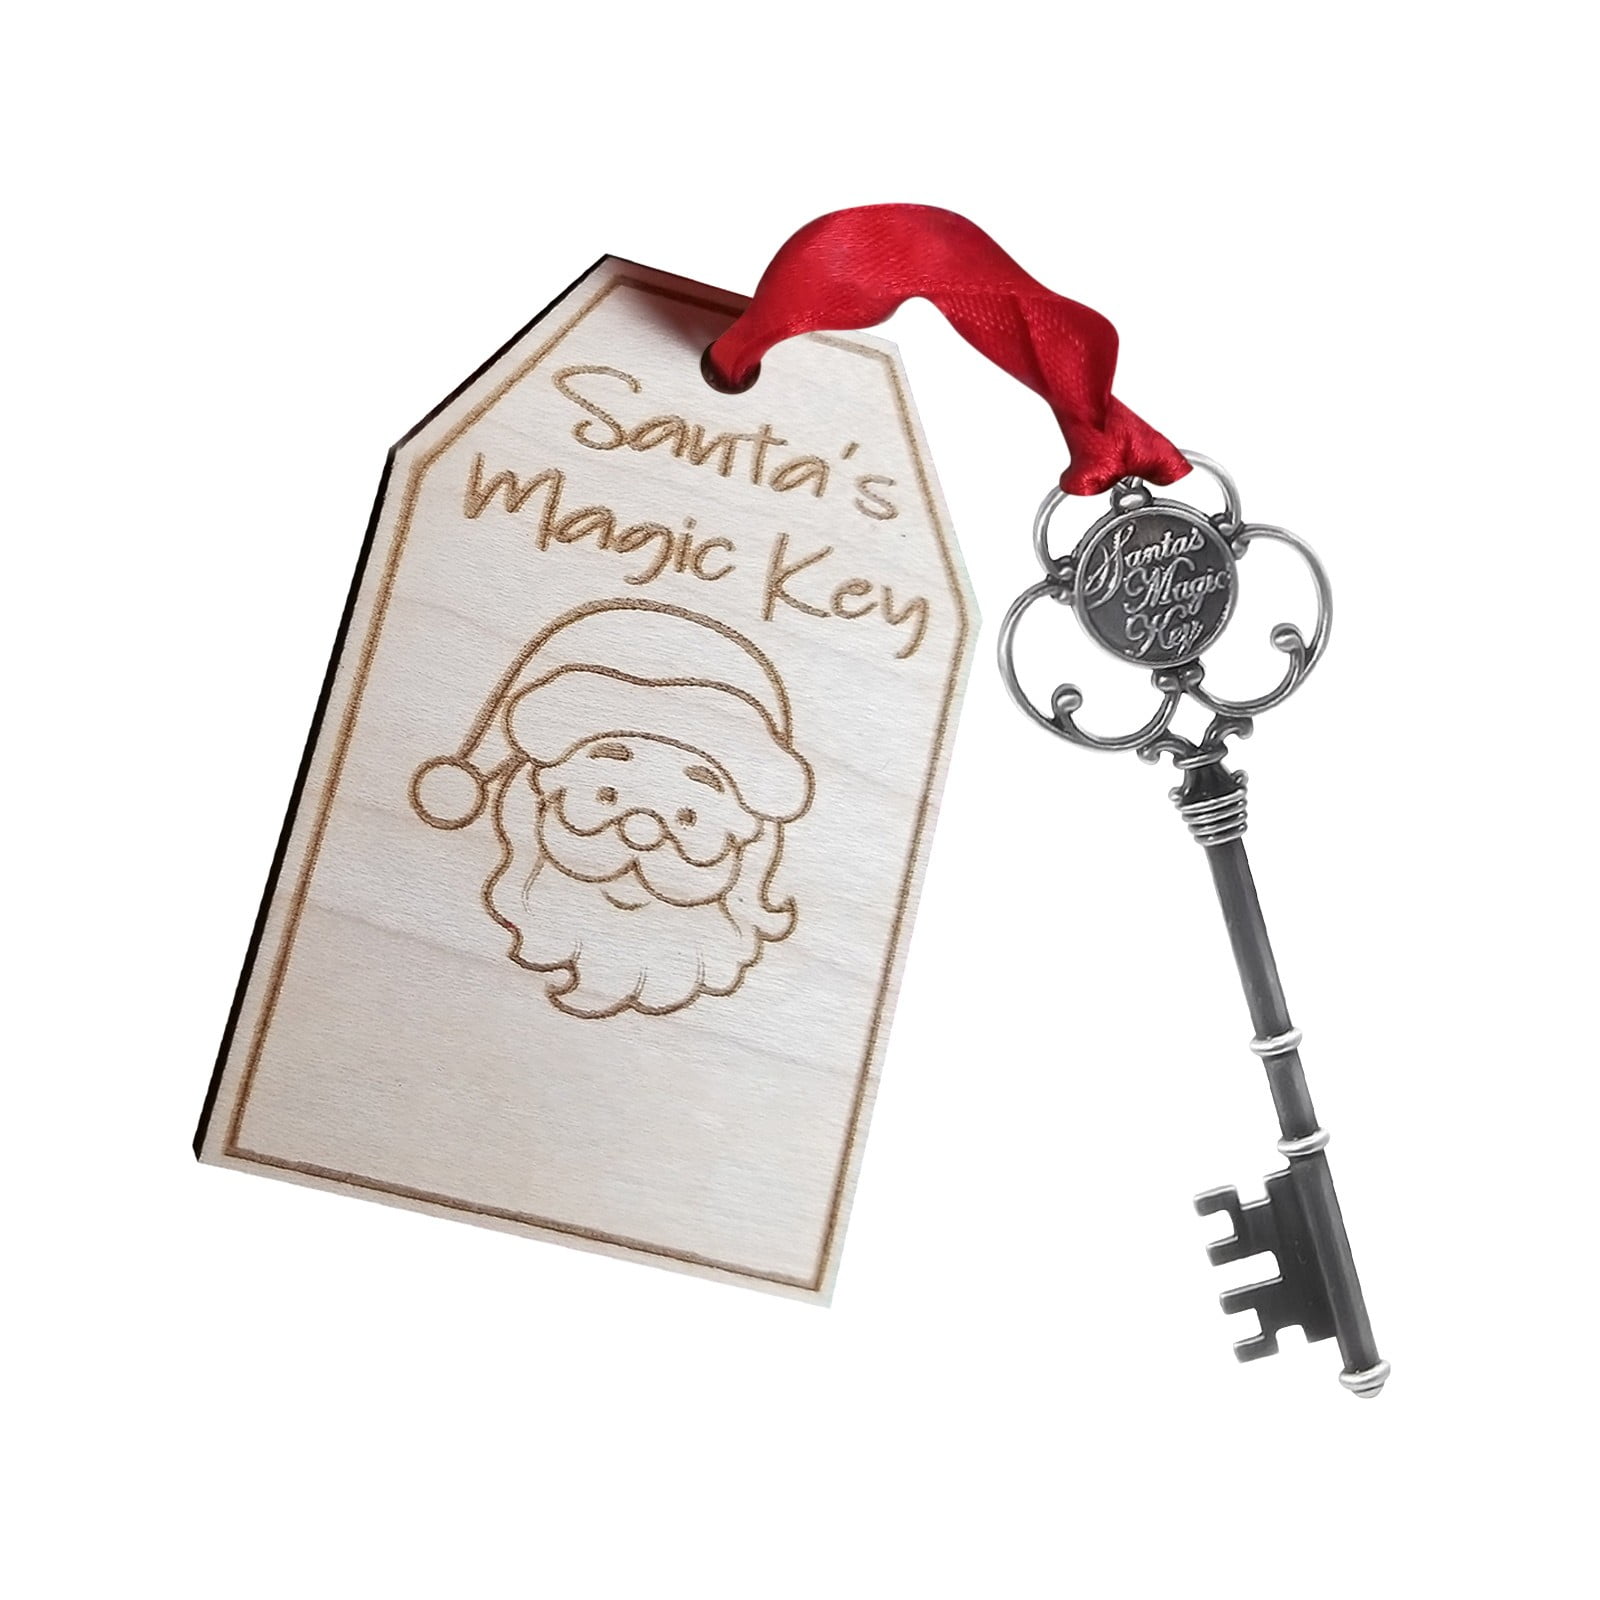 Heiheiup Santa's Key For House With No Chimney Ornament Santa Key Santa  Clause Decoration Santas Key Giant Christmas Balls